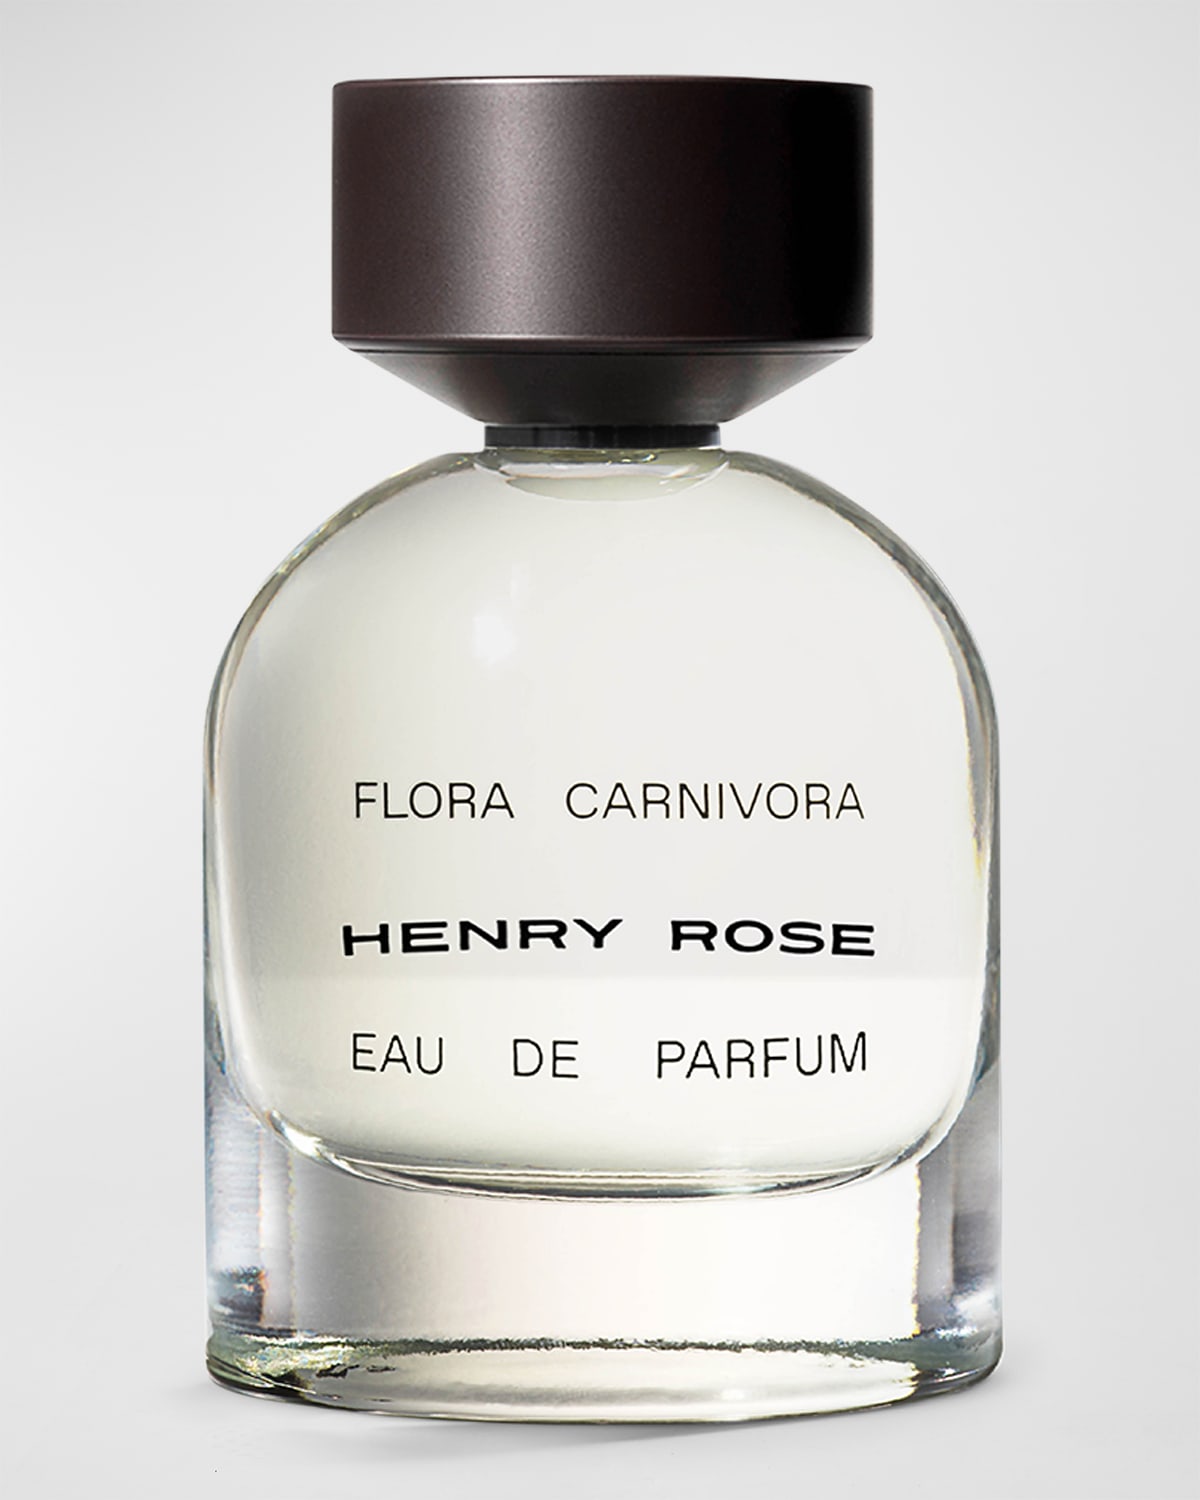 HENRY ROSE Flora Carnivora Eau de Parfum, 1.7 oz.